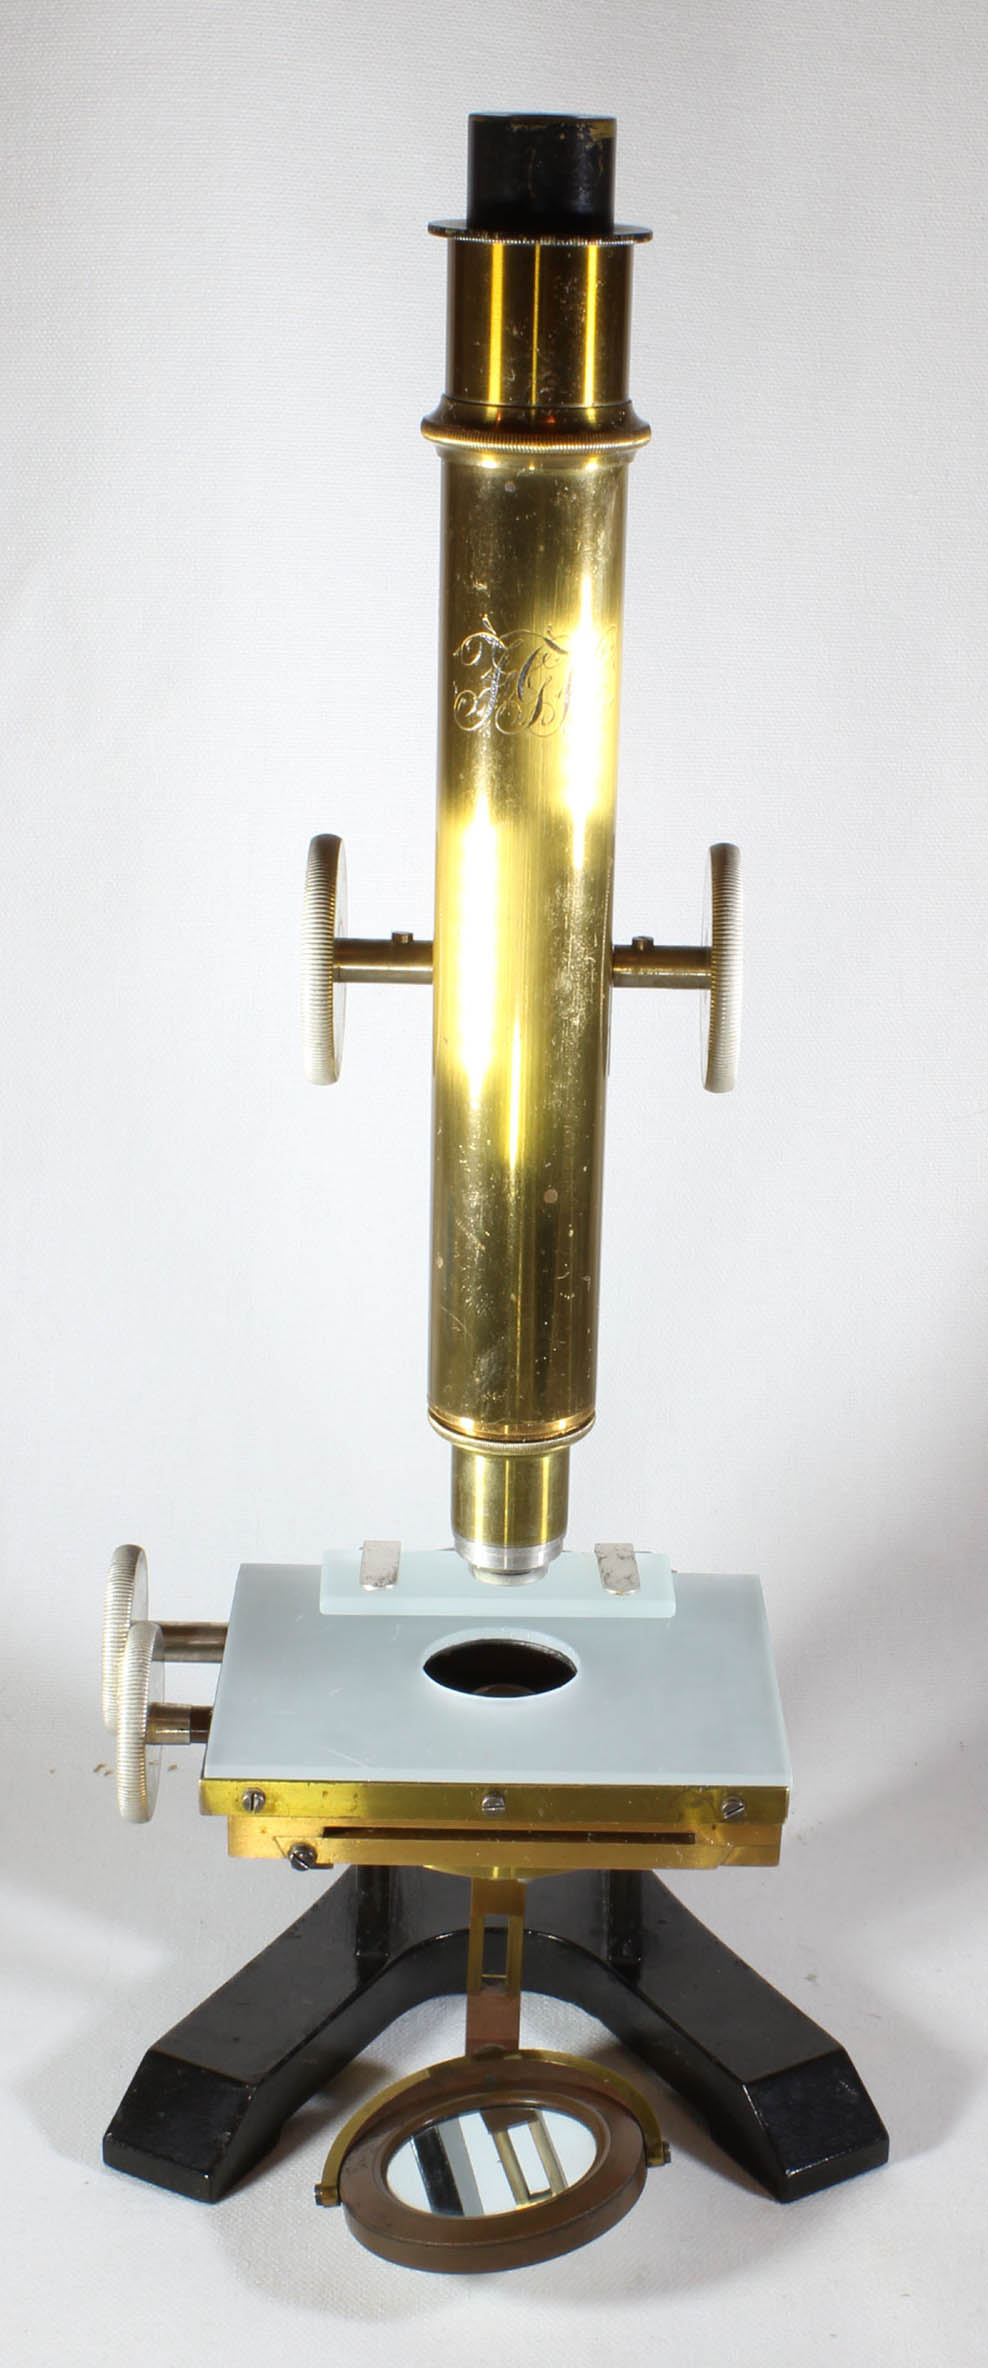 Grunow Medium sized Microscope Front View